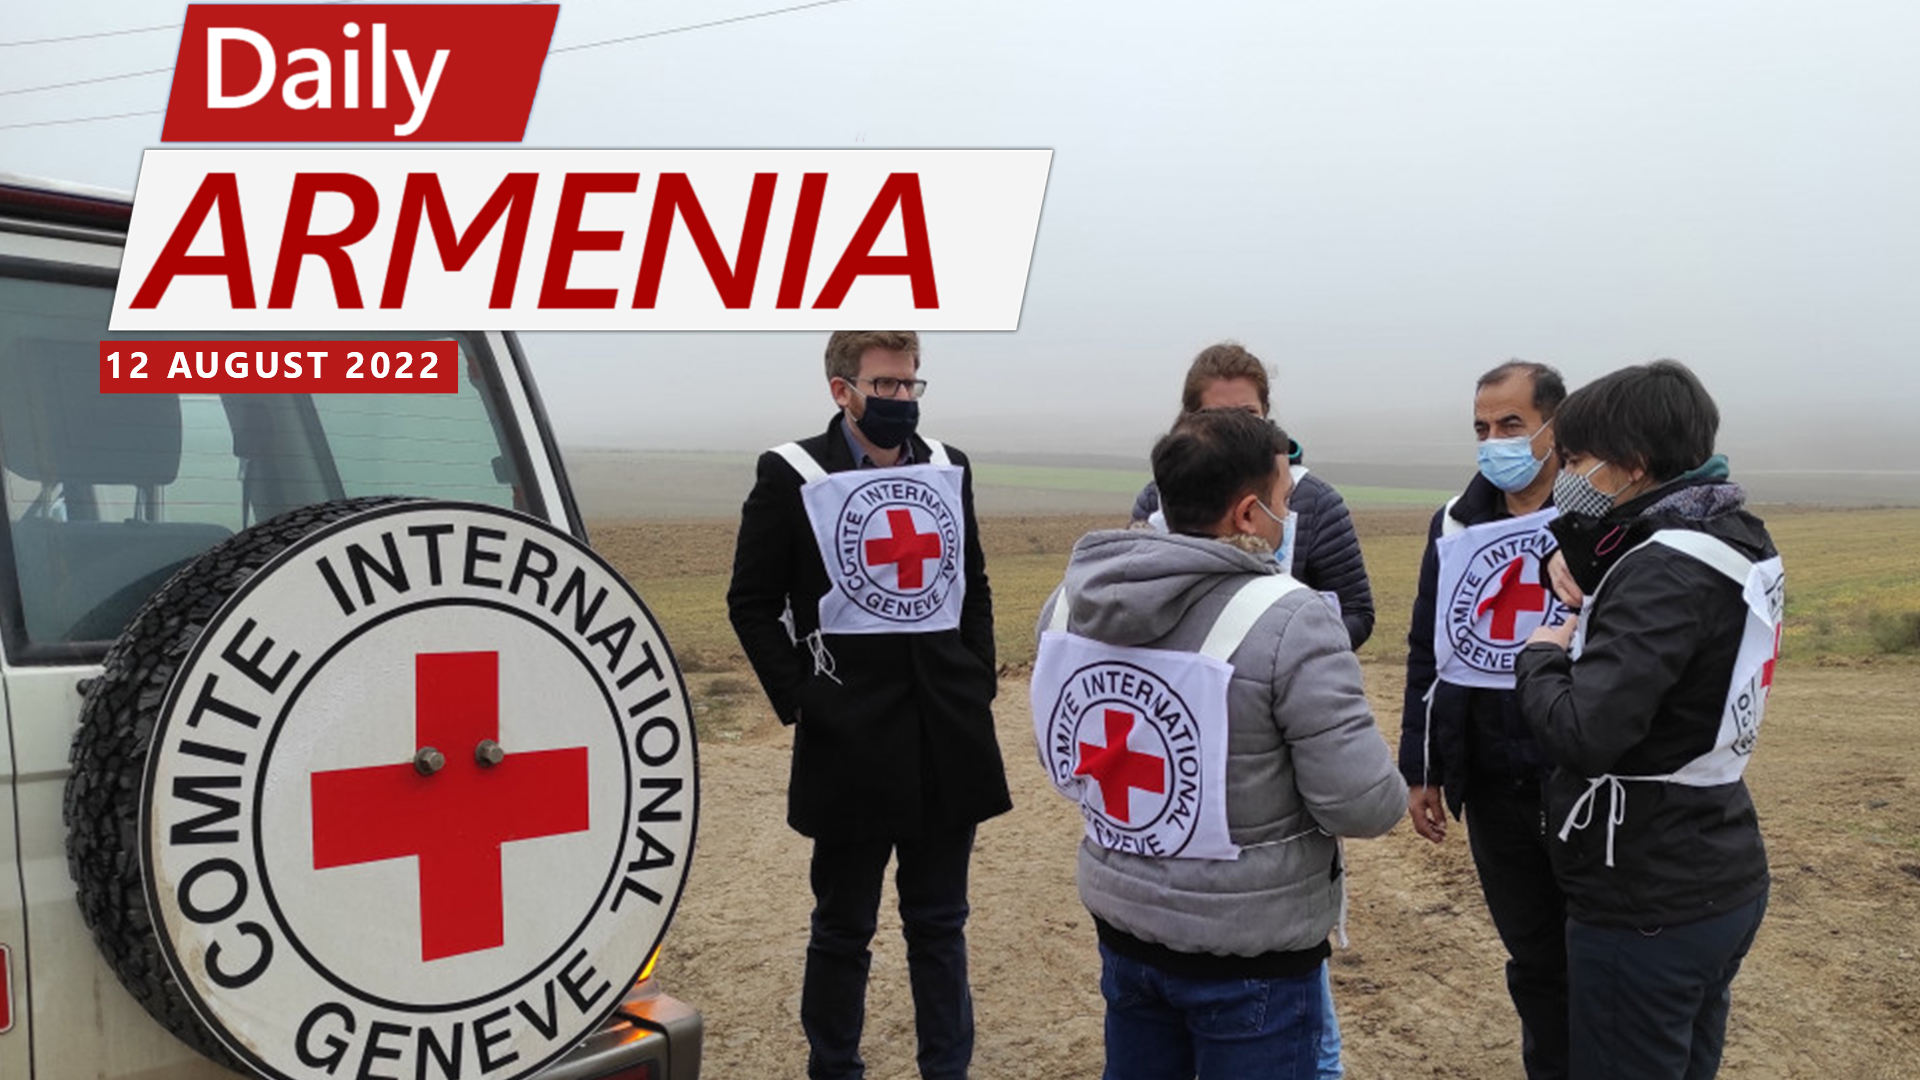 Over 300 Armenians still missing since 2020 war, says Red Cross